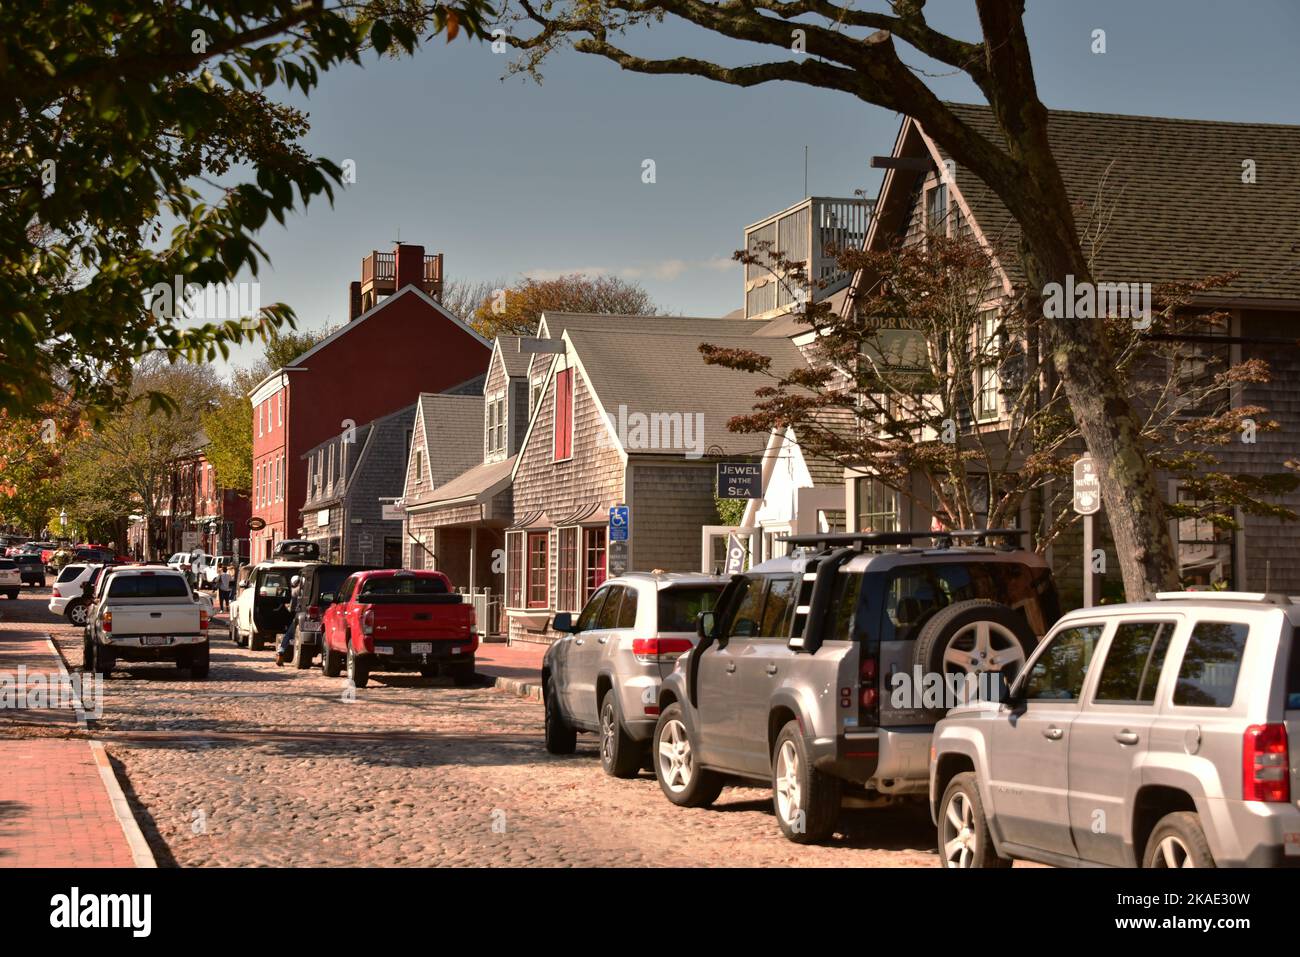 Main Street, Nantucket Island, USA Stock Photo